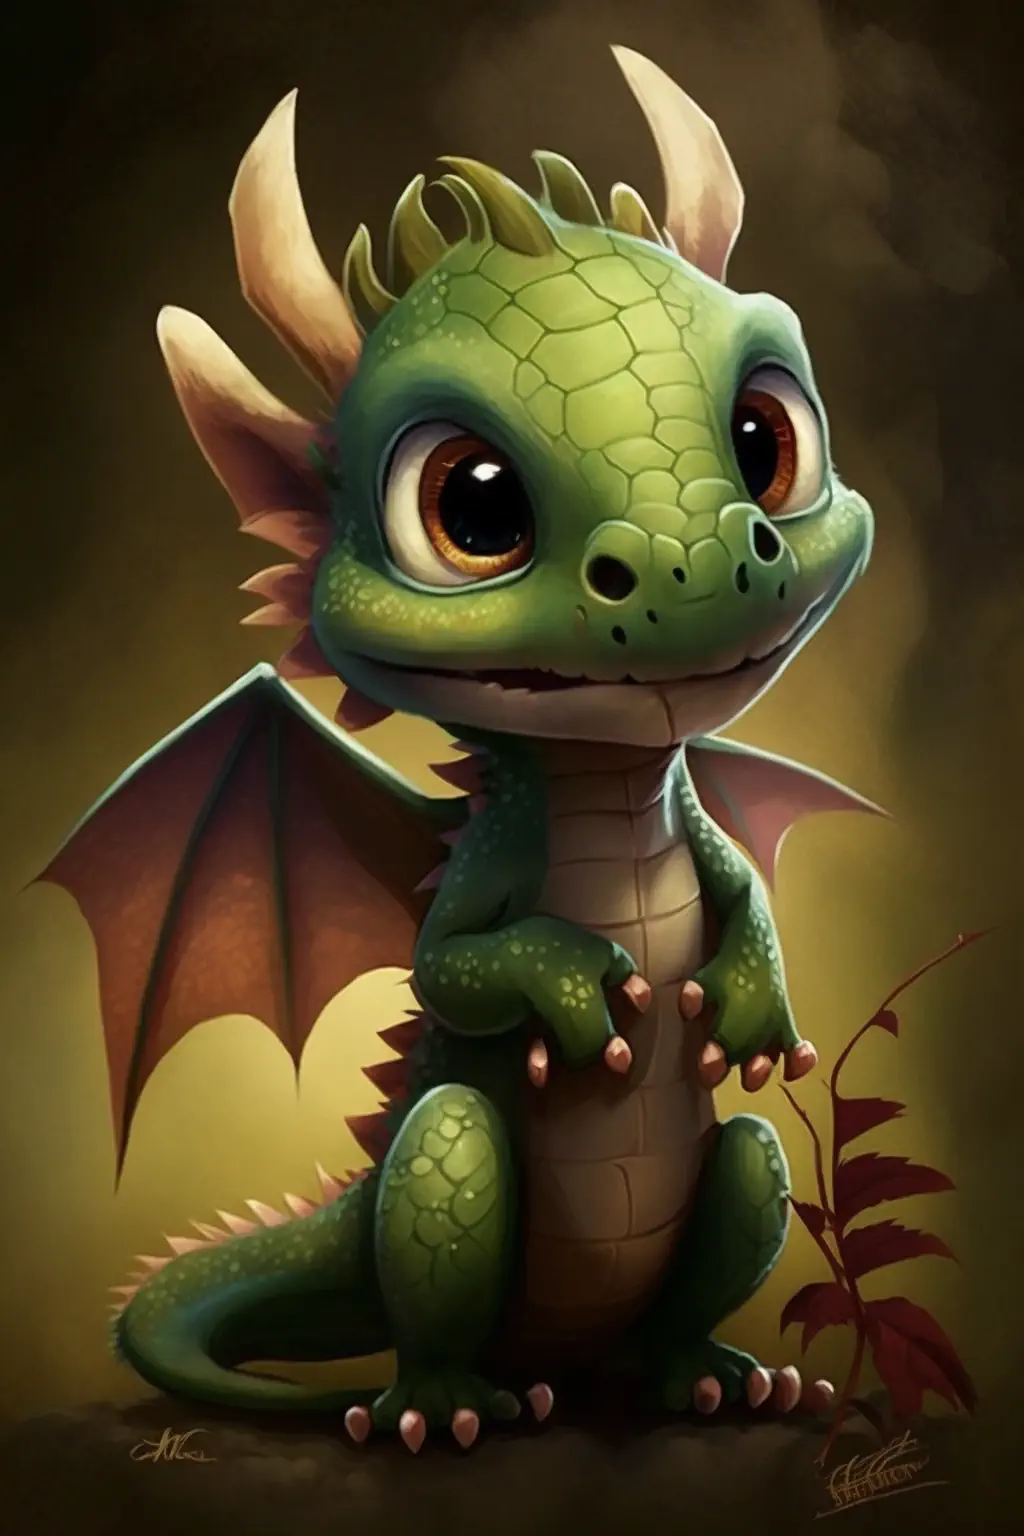 Drakosha_cute_dragon_character_in_classic_Disney_cartoon_style_6a373335-a765-4bf4-a350-bce032b174ee